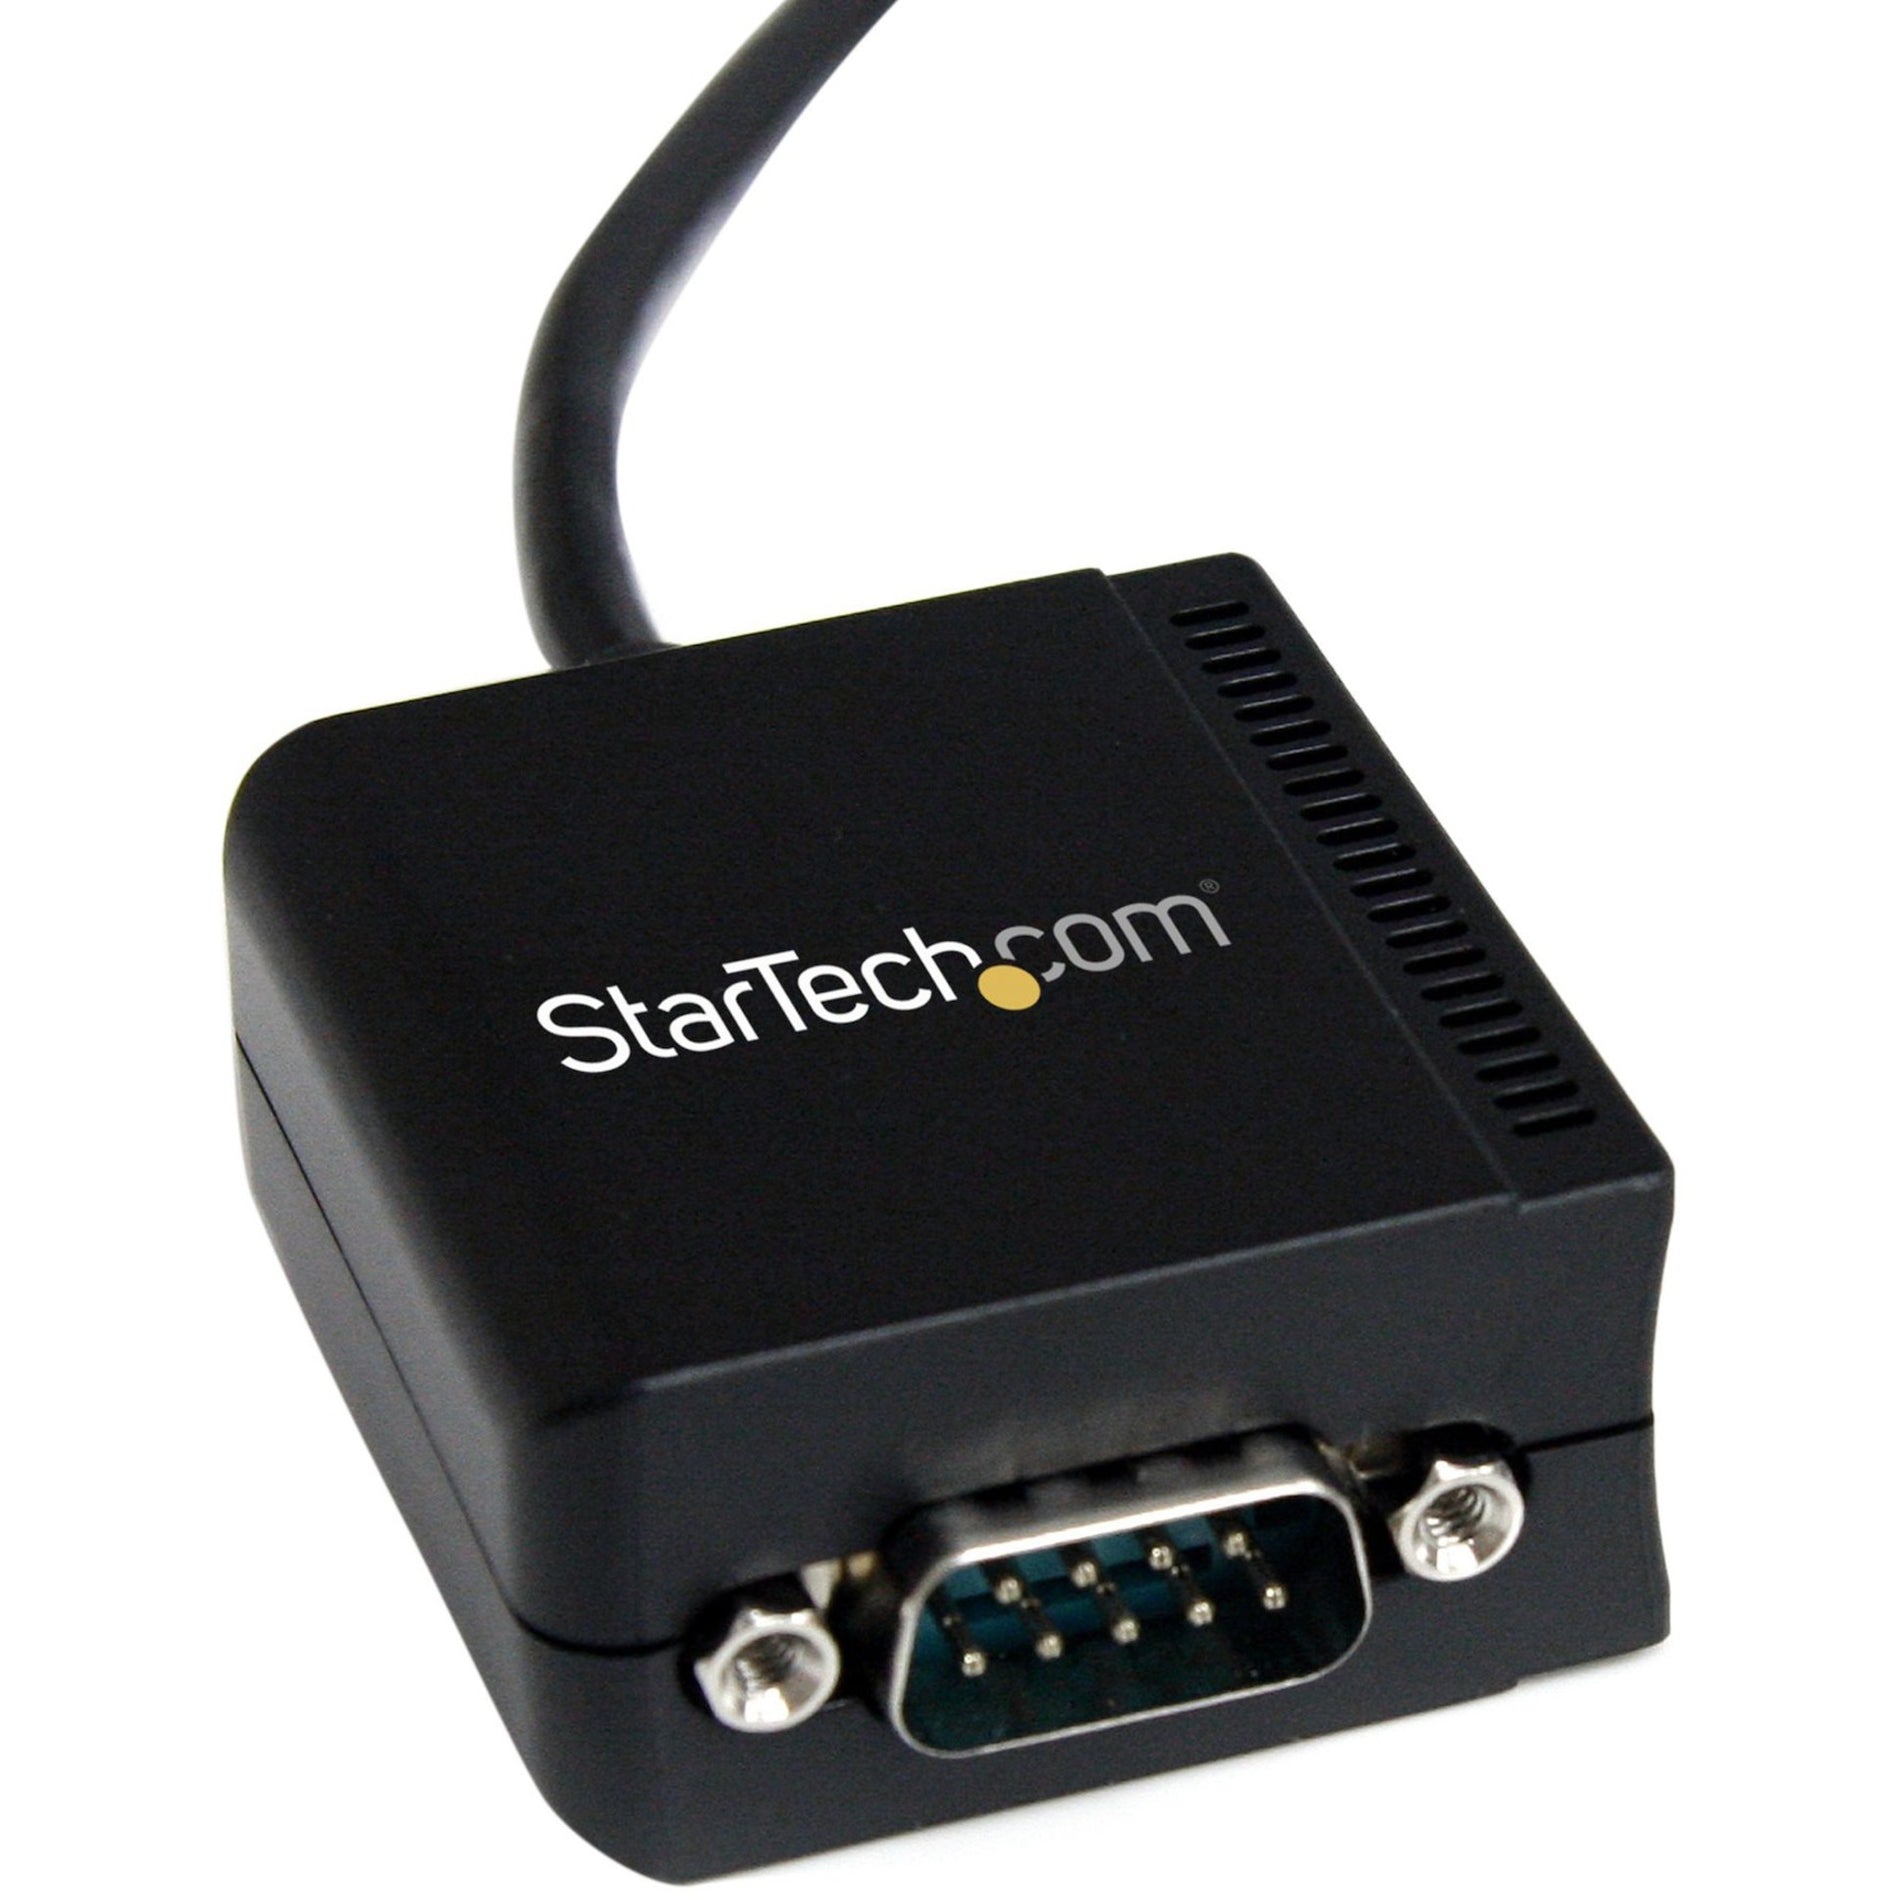 StarTech.com ICUSB2321FIS 1 ポート FTDI USB からシリアル RS232 アダプターケーブル、絶縁、サージ保護、8.20 ft ケーブル長、ブラック ブランド名: StarTech.com (スターテック・ドットコム)